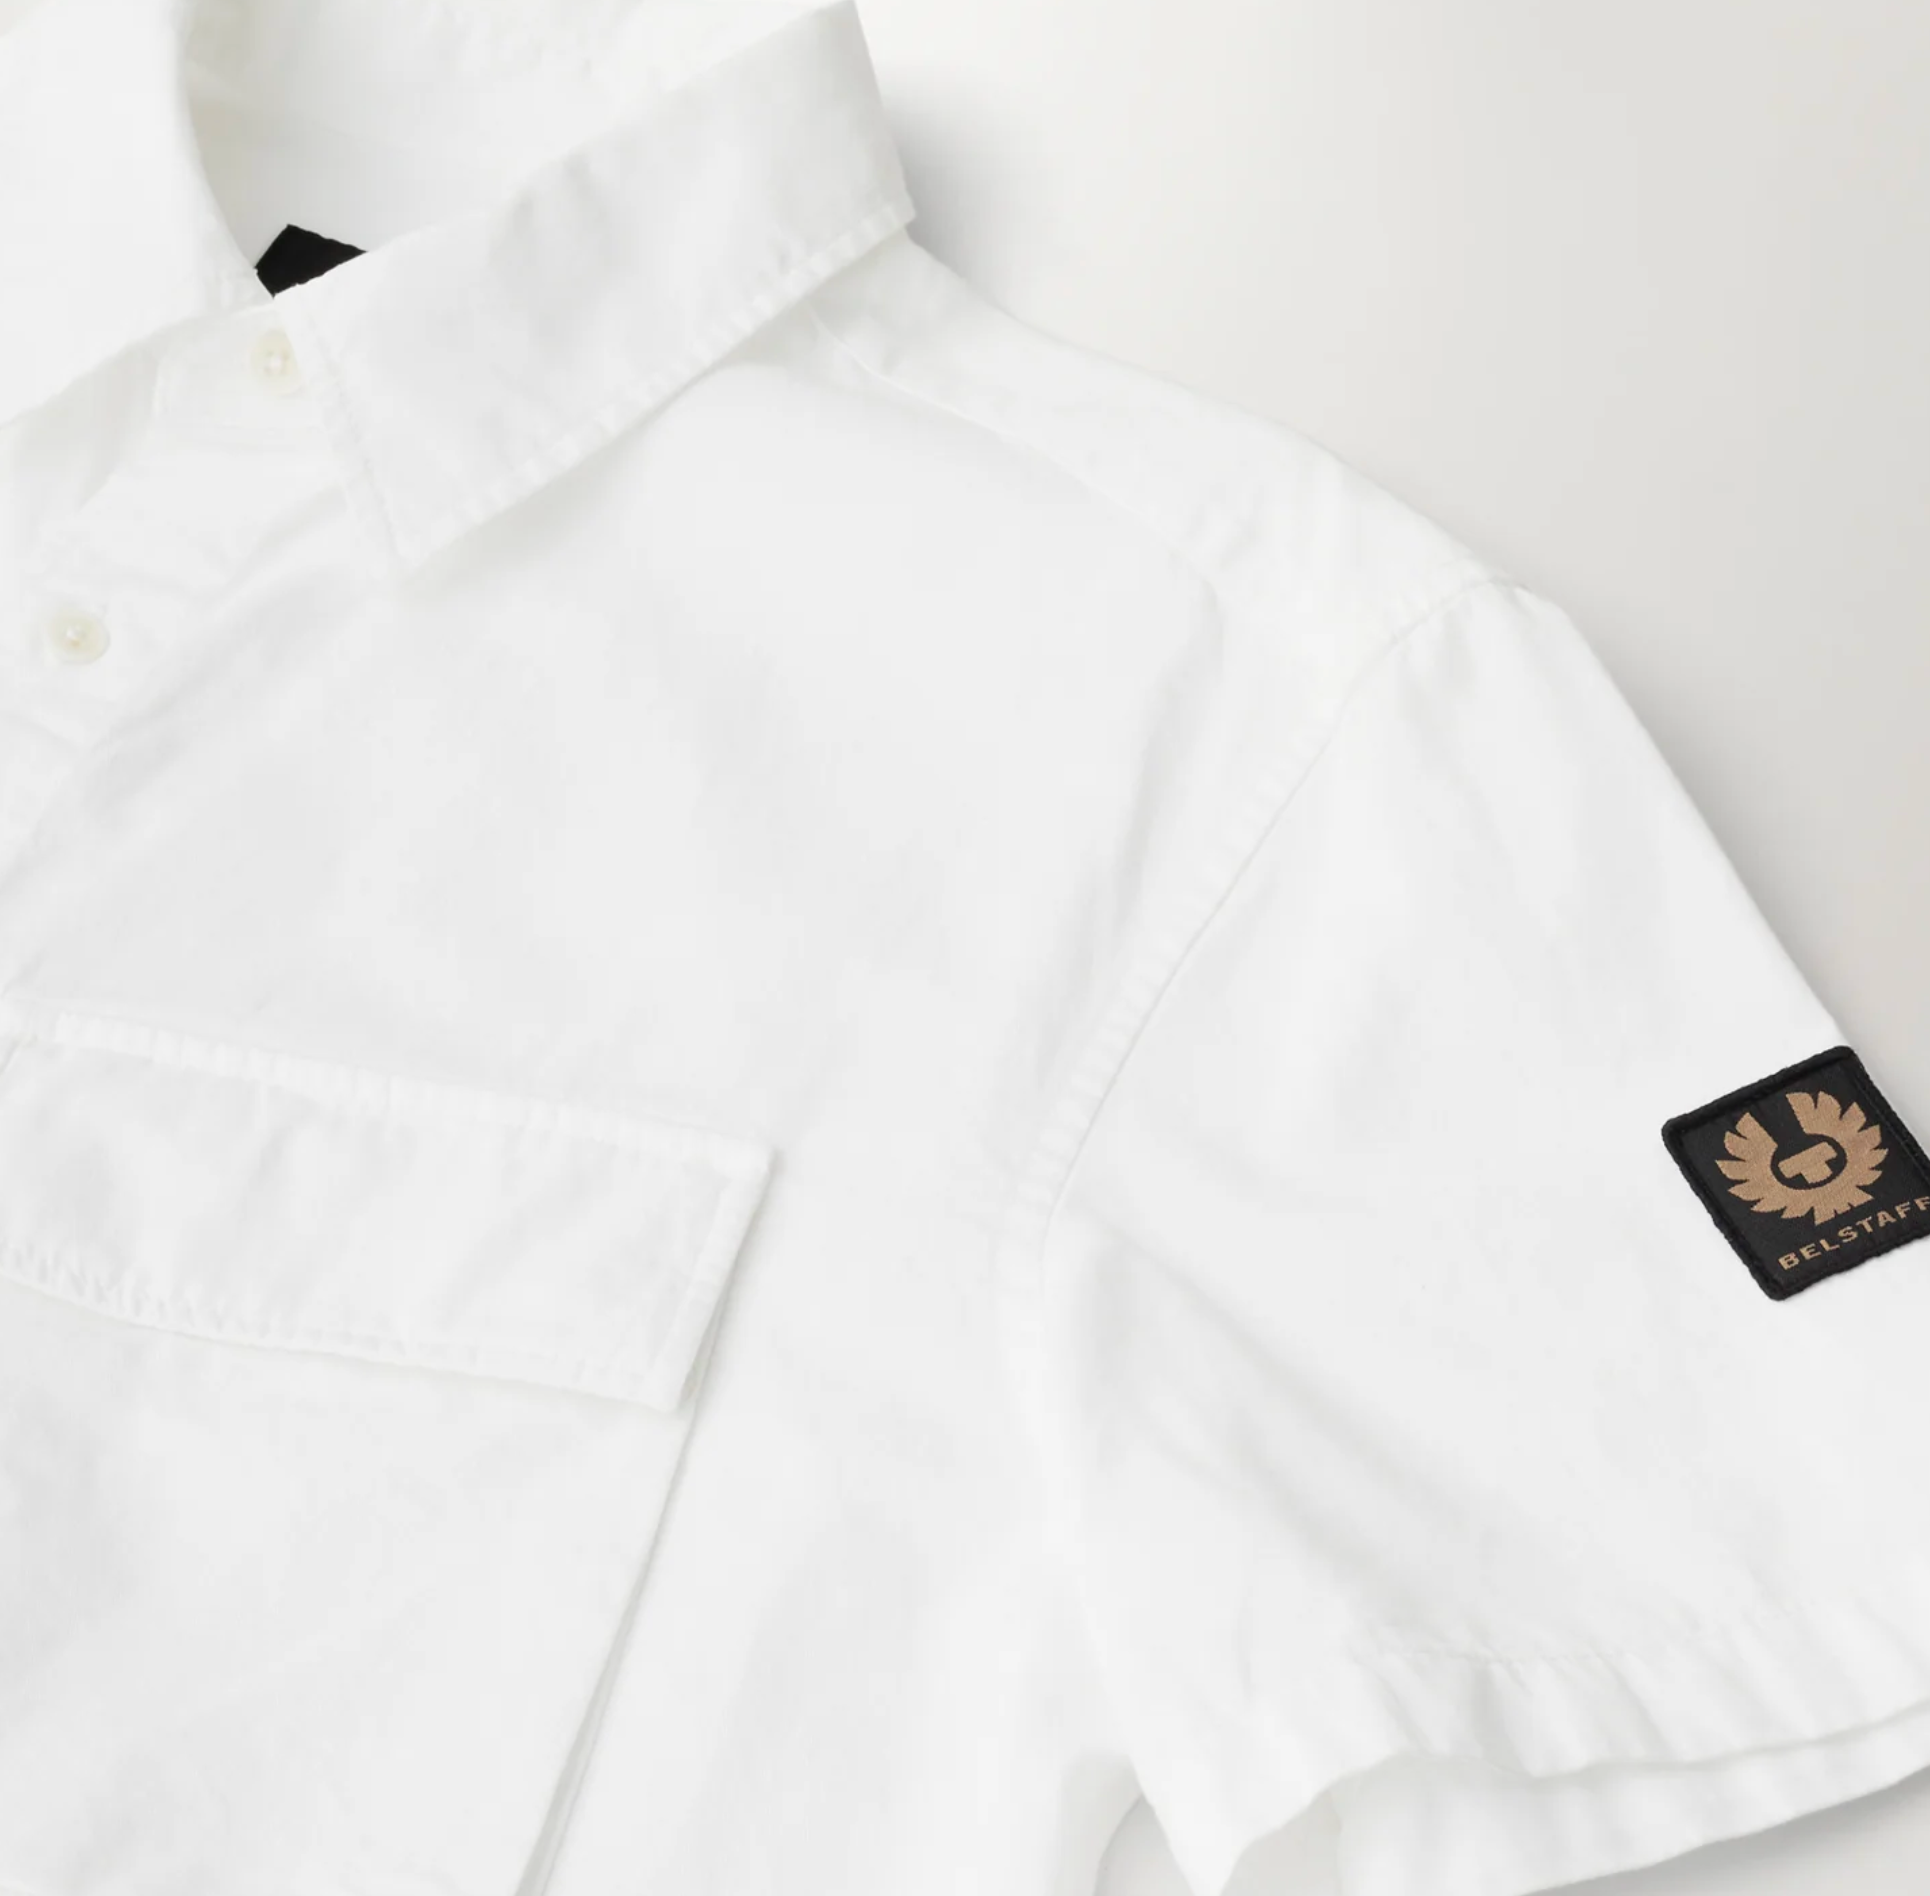 Belstaff "Scale" Short Sleeve Shirt White